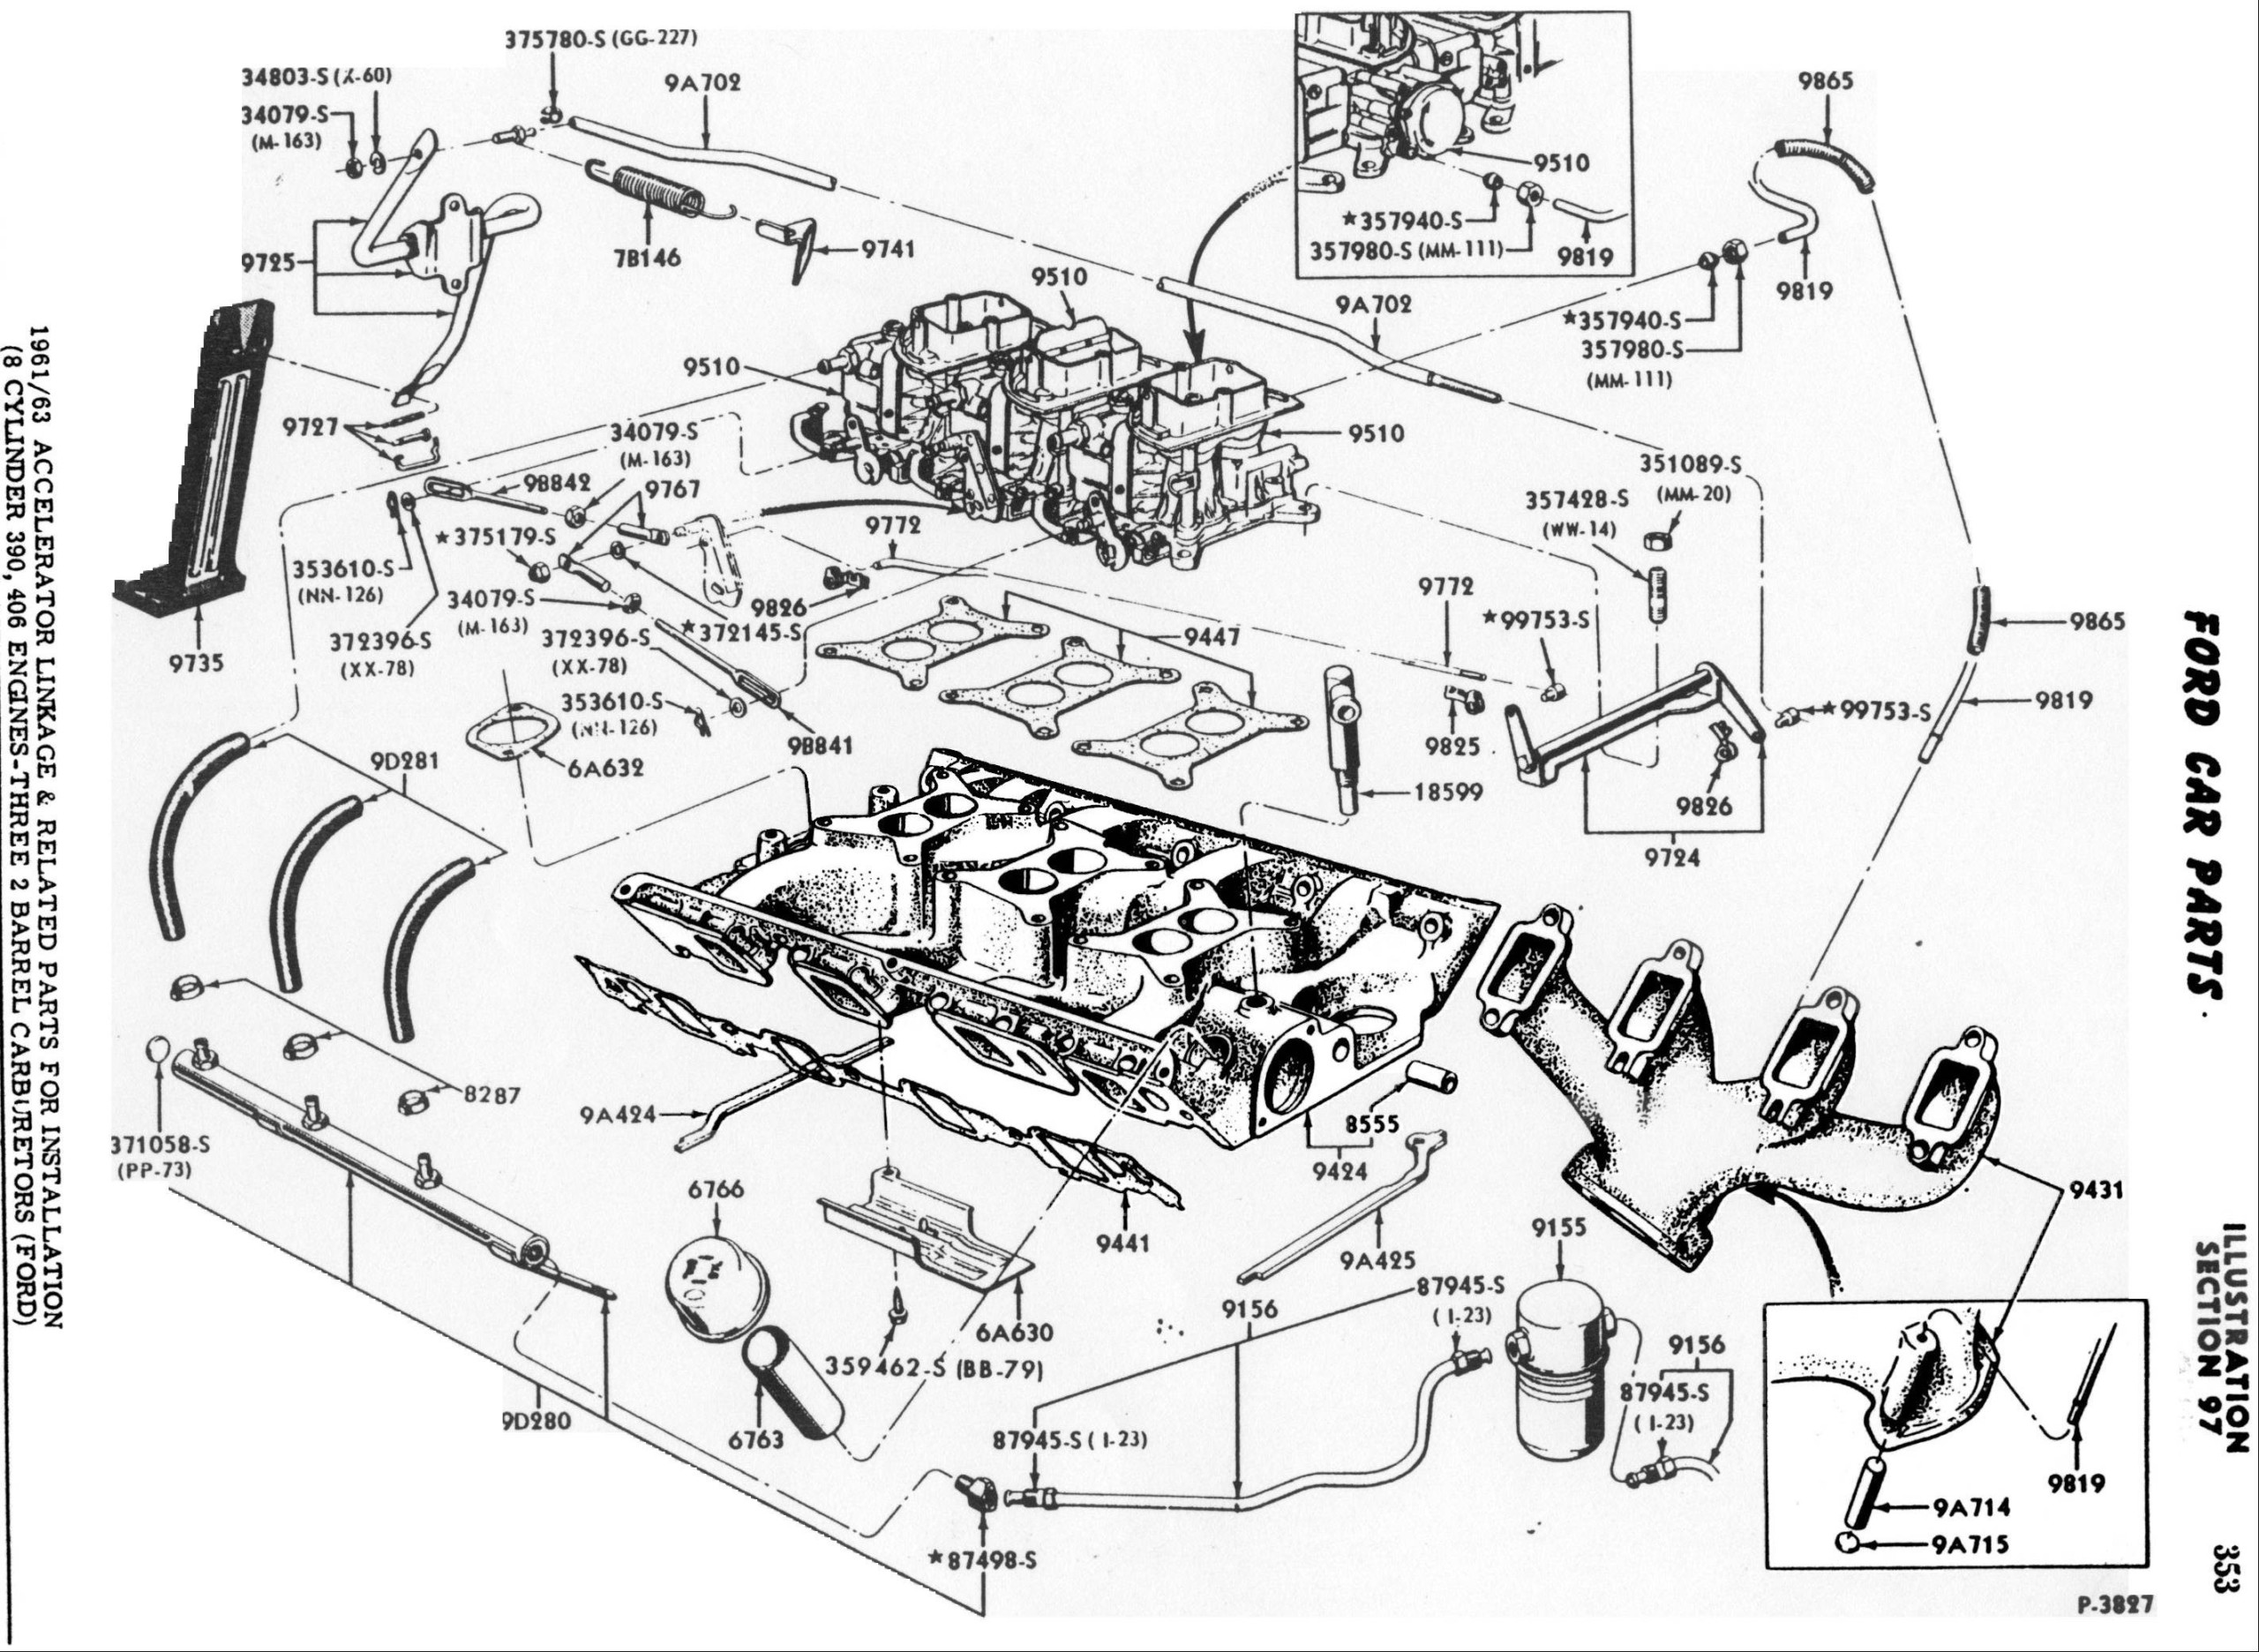 Diagram] 1987 Ford 460 Ci Wiring Diagram Full Version Hd